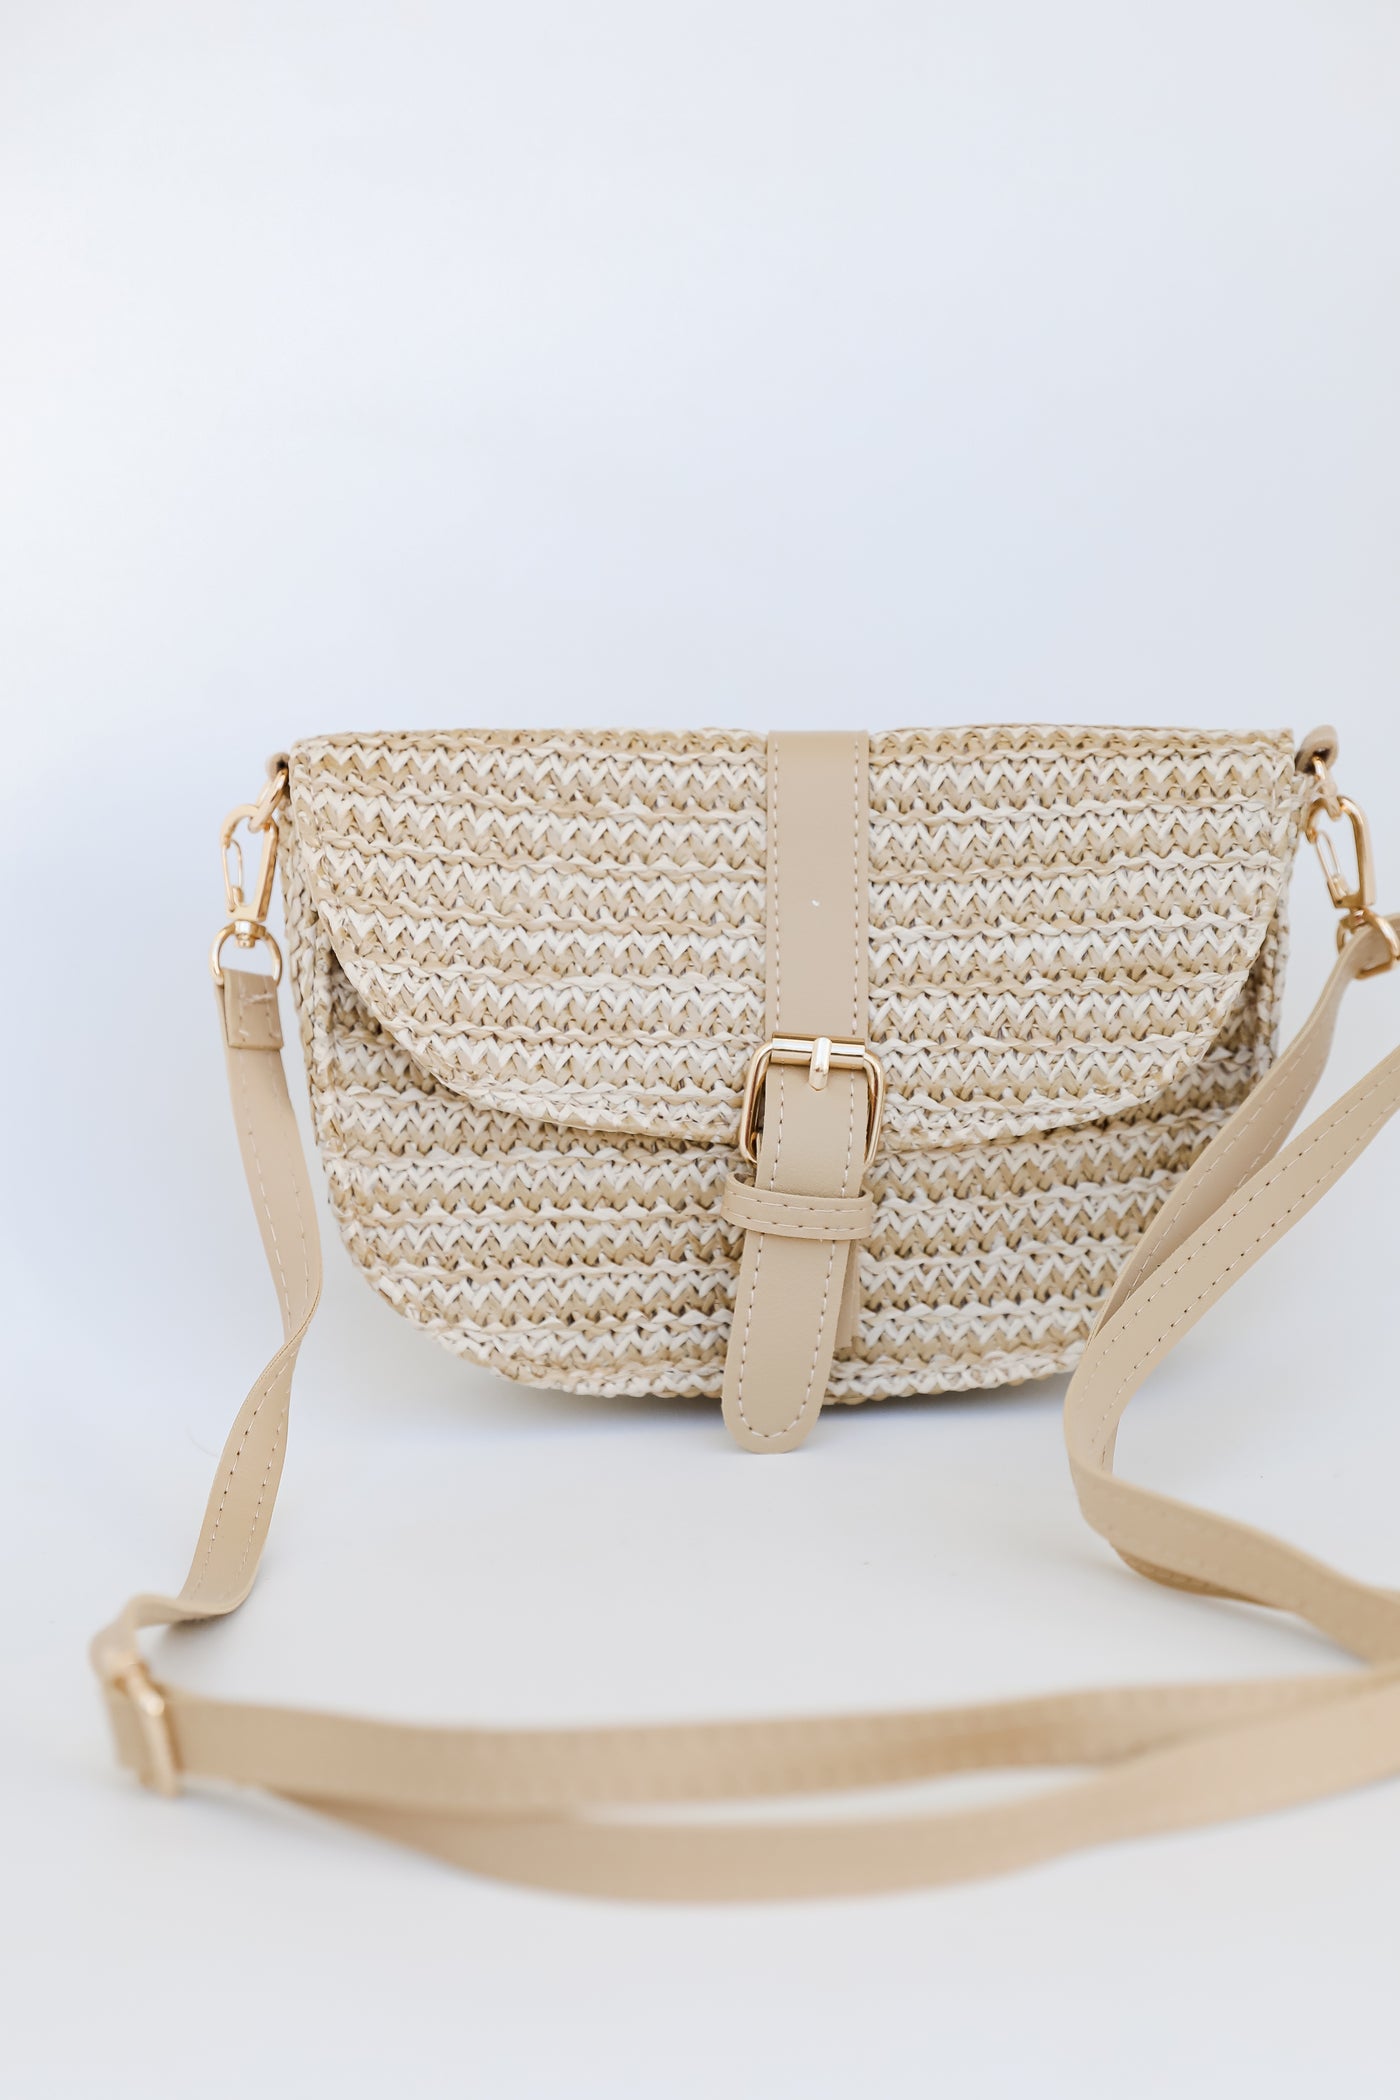 LoyGkgas New Straw Shoulder Bag Women Woven Leather Small Crossbody Tote  Handbag (Beige) 